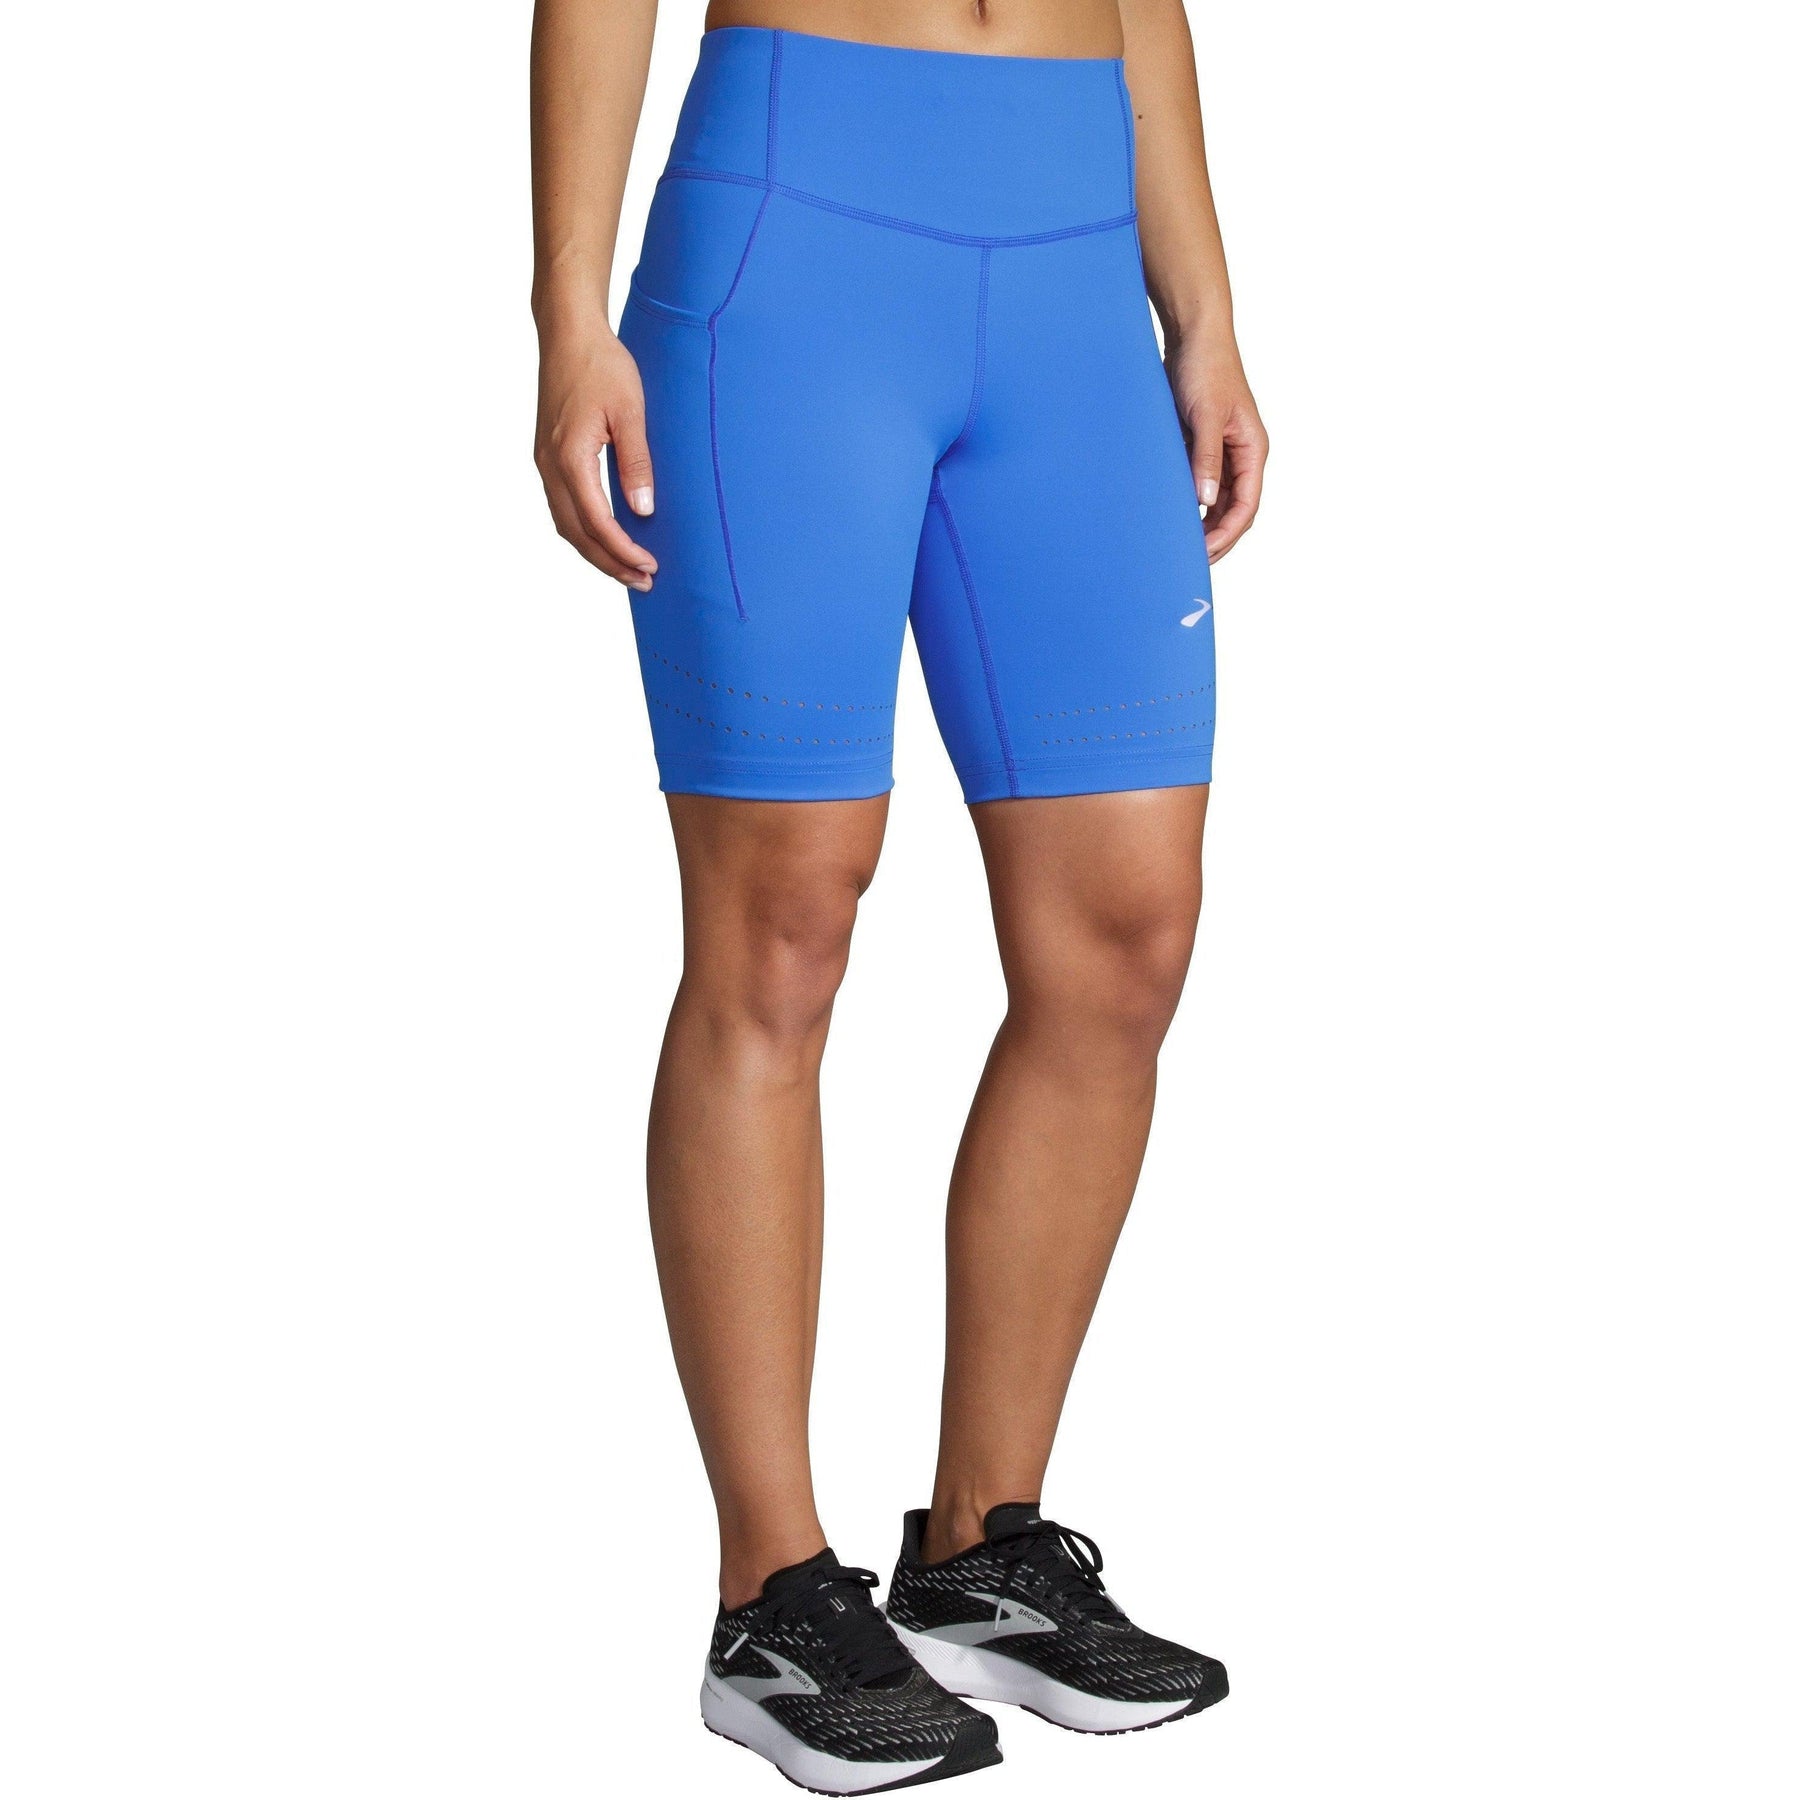 L. SHORT TIGHTS Running shorts - Women - Diadora Online Store NO